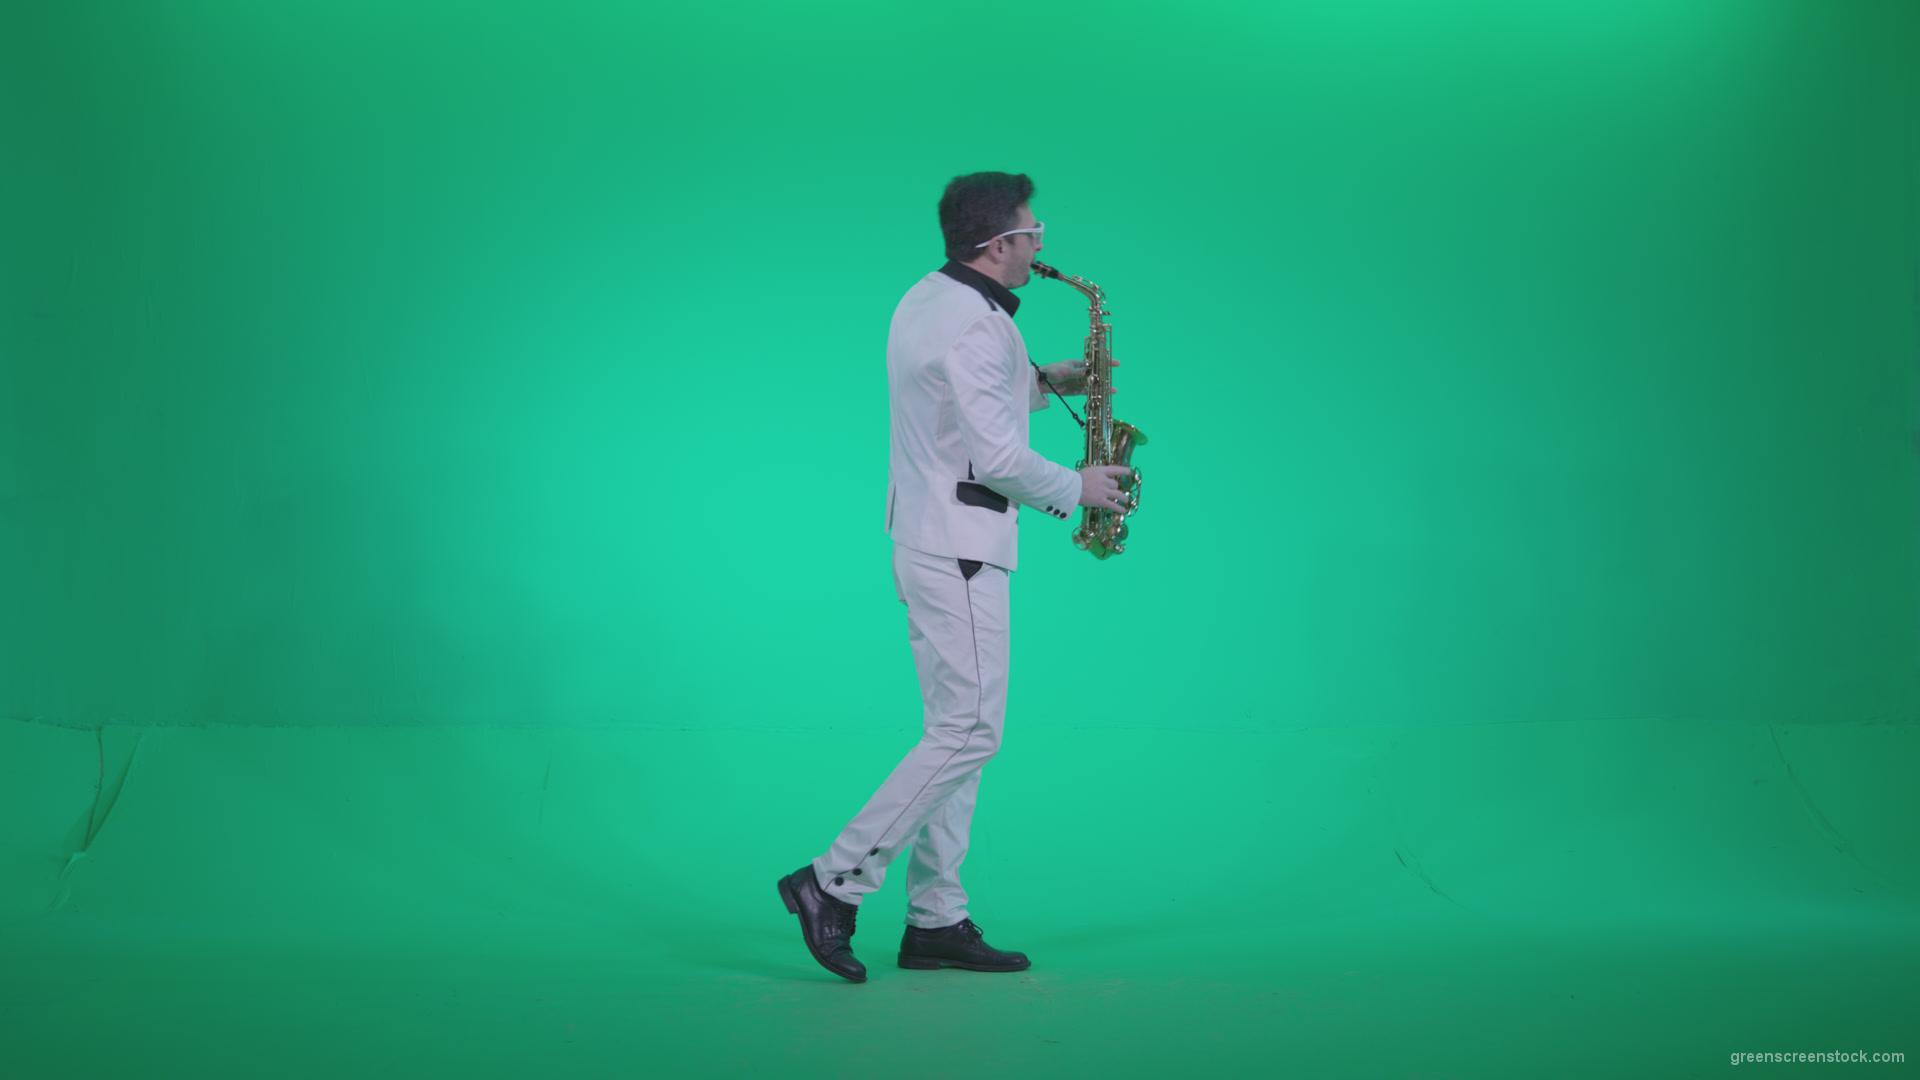 Saxophone-Virtuoso-Performer-s2_009 Green Screen Stock